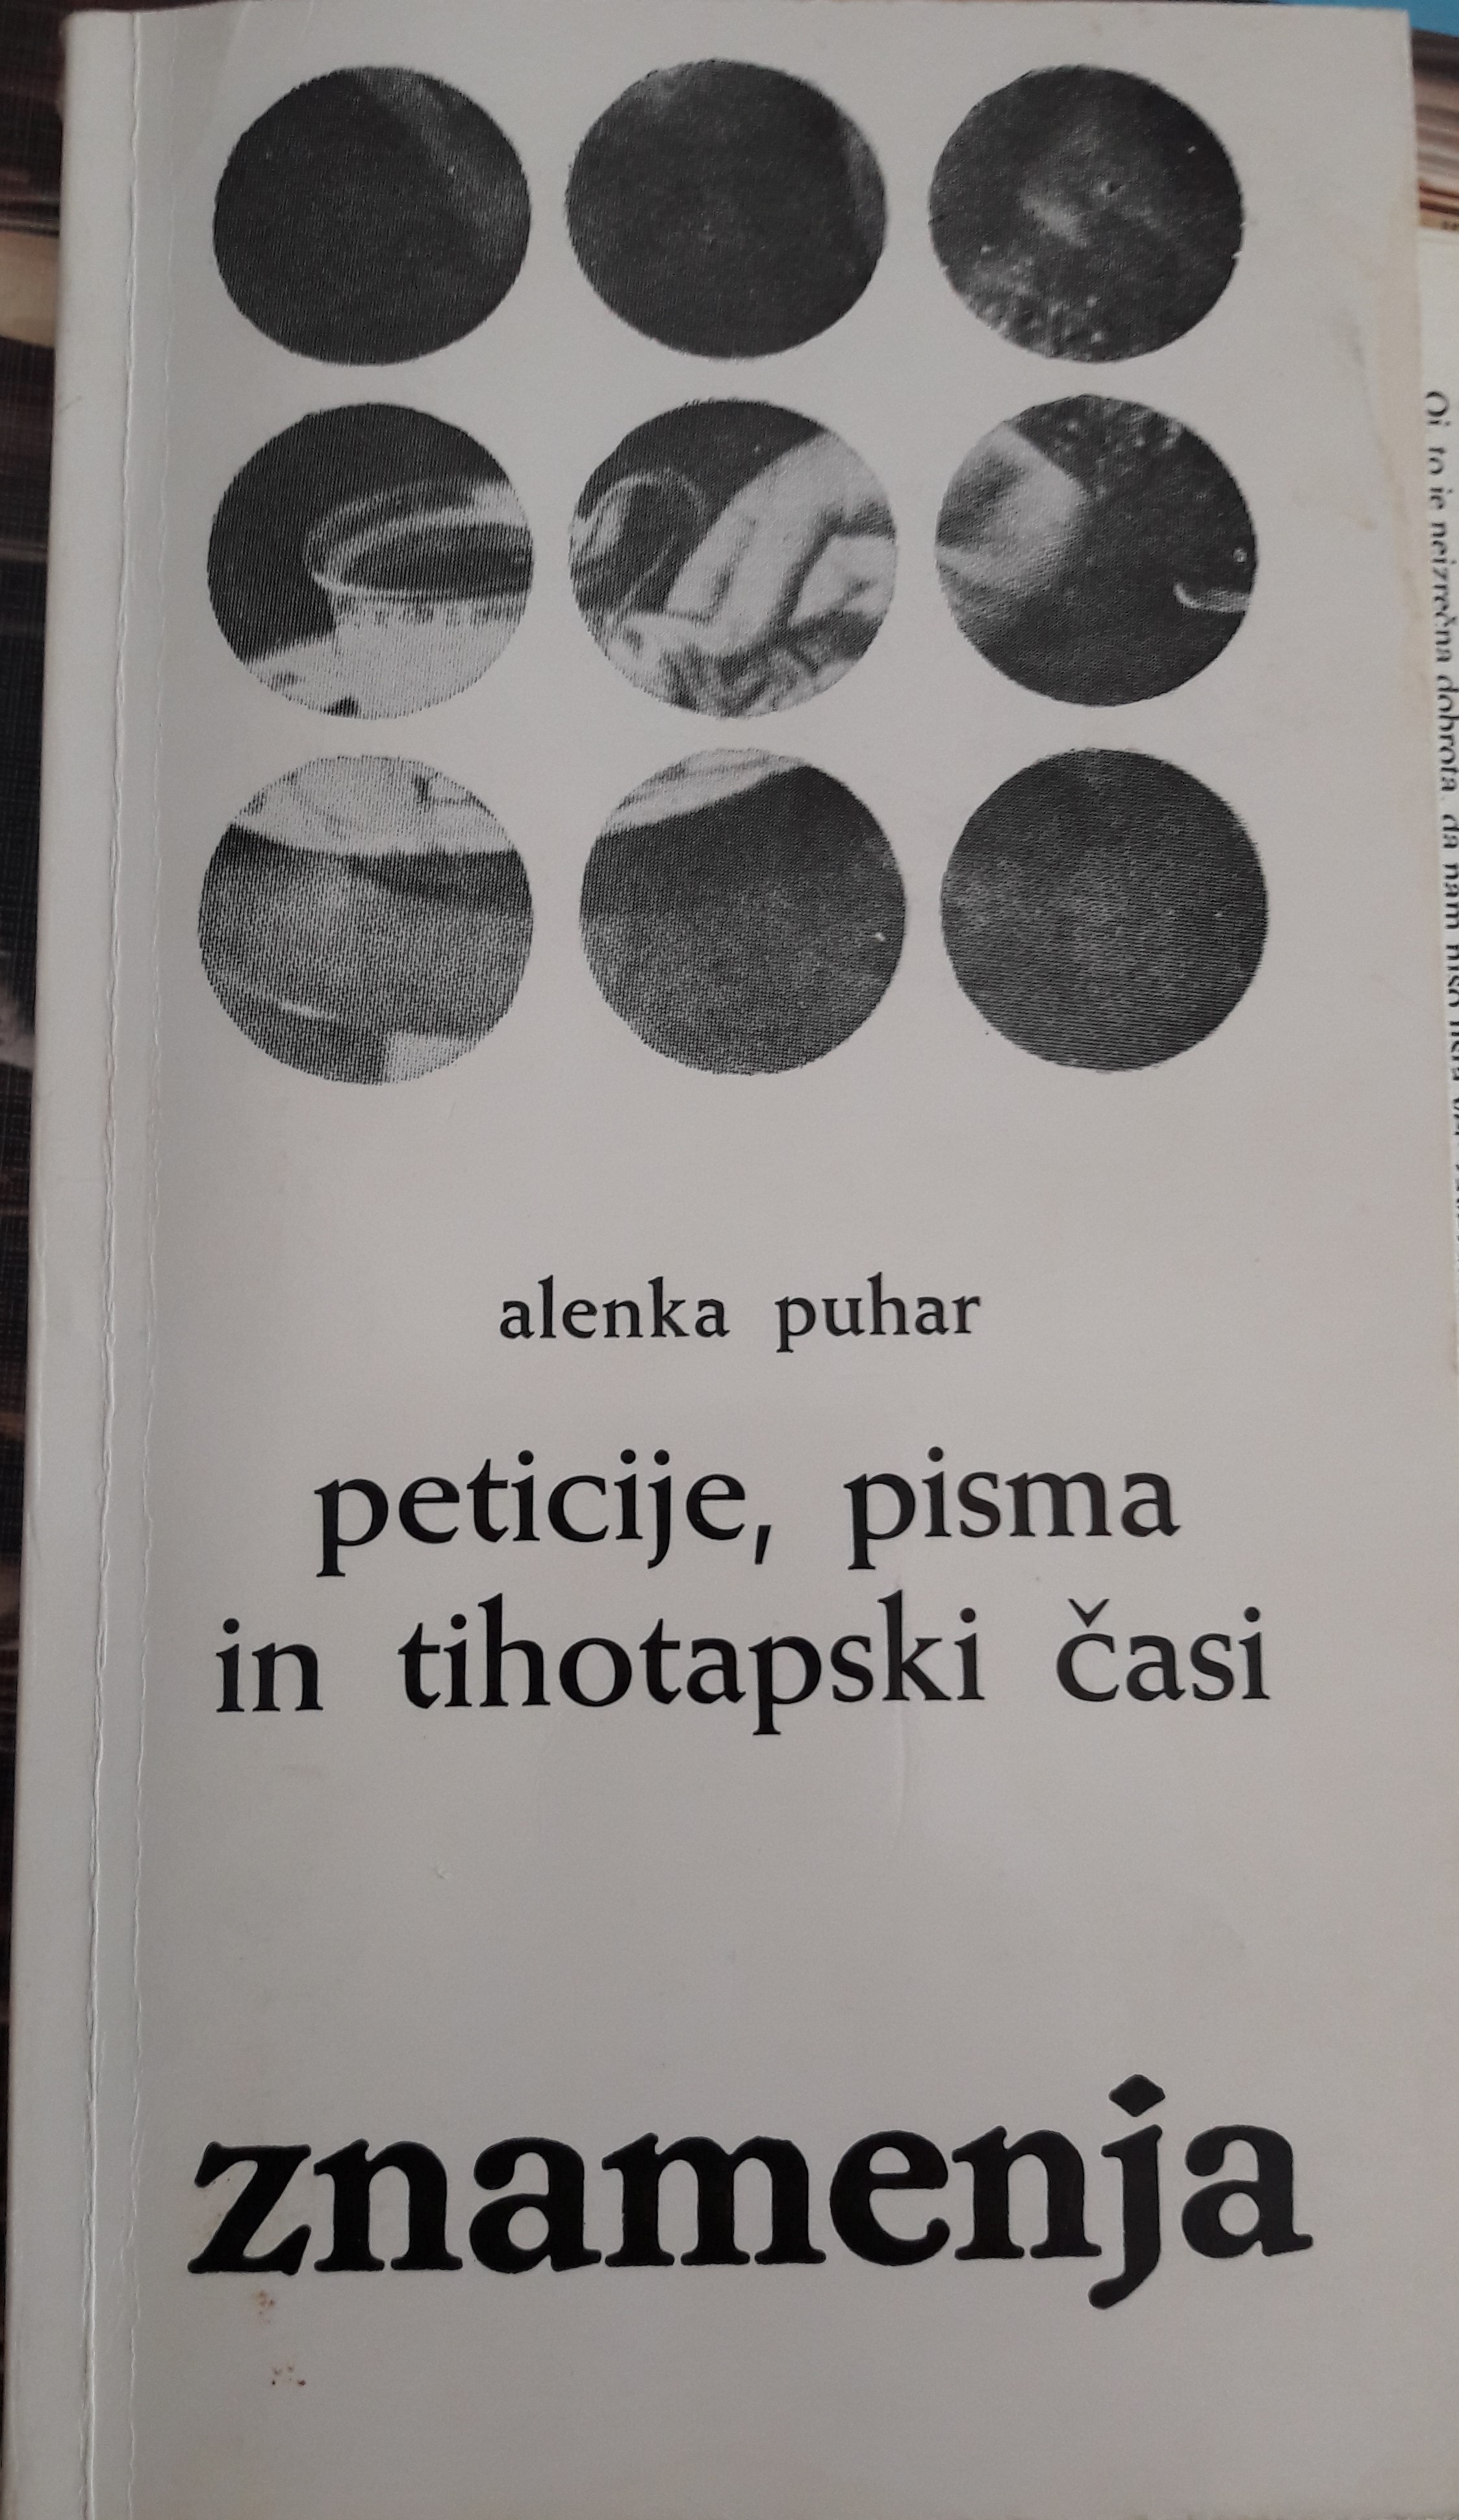 Puhar, Alenka. Peticije, pisma in tihotapski časi. Maribor, 1985. 